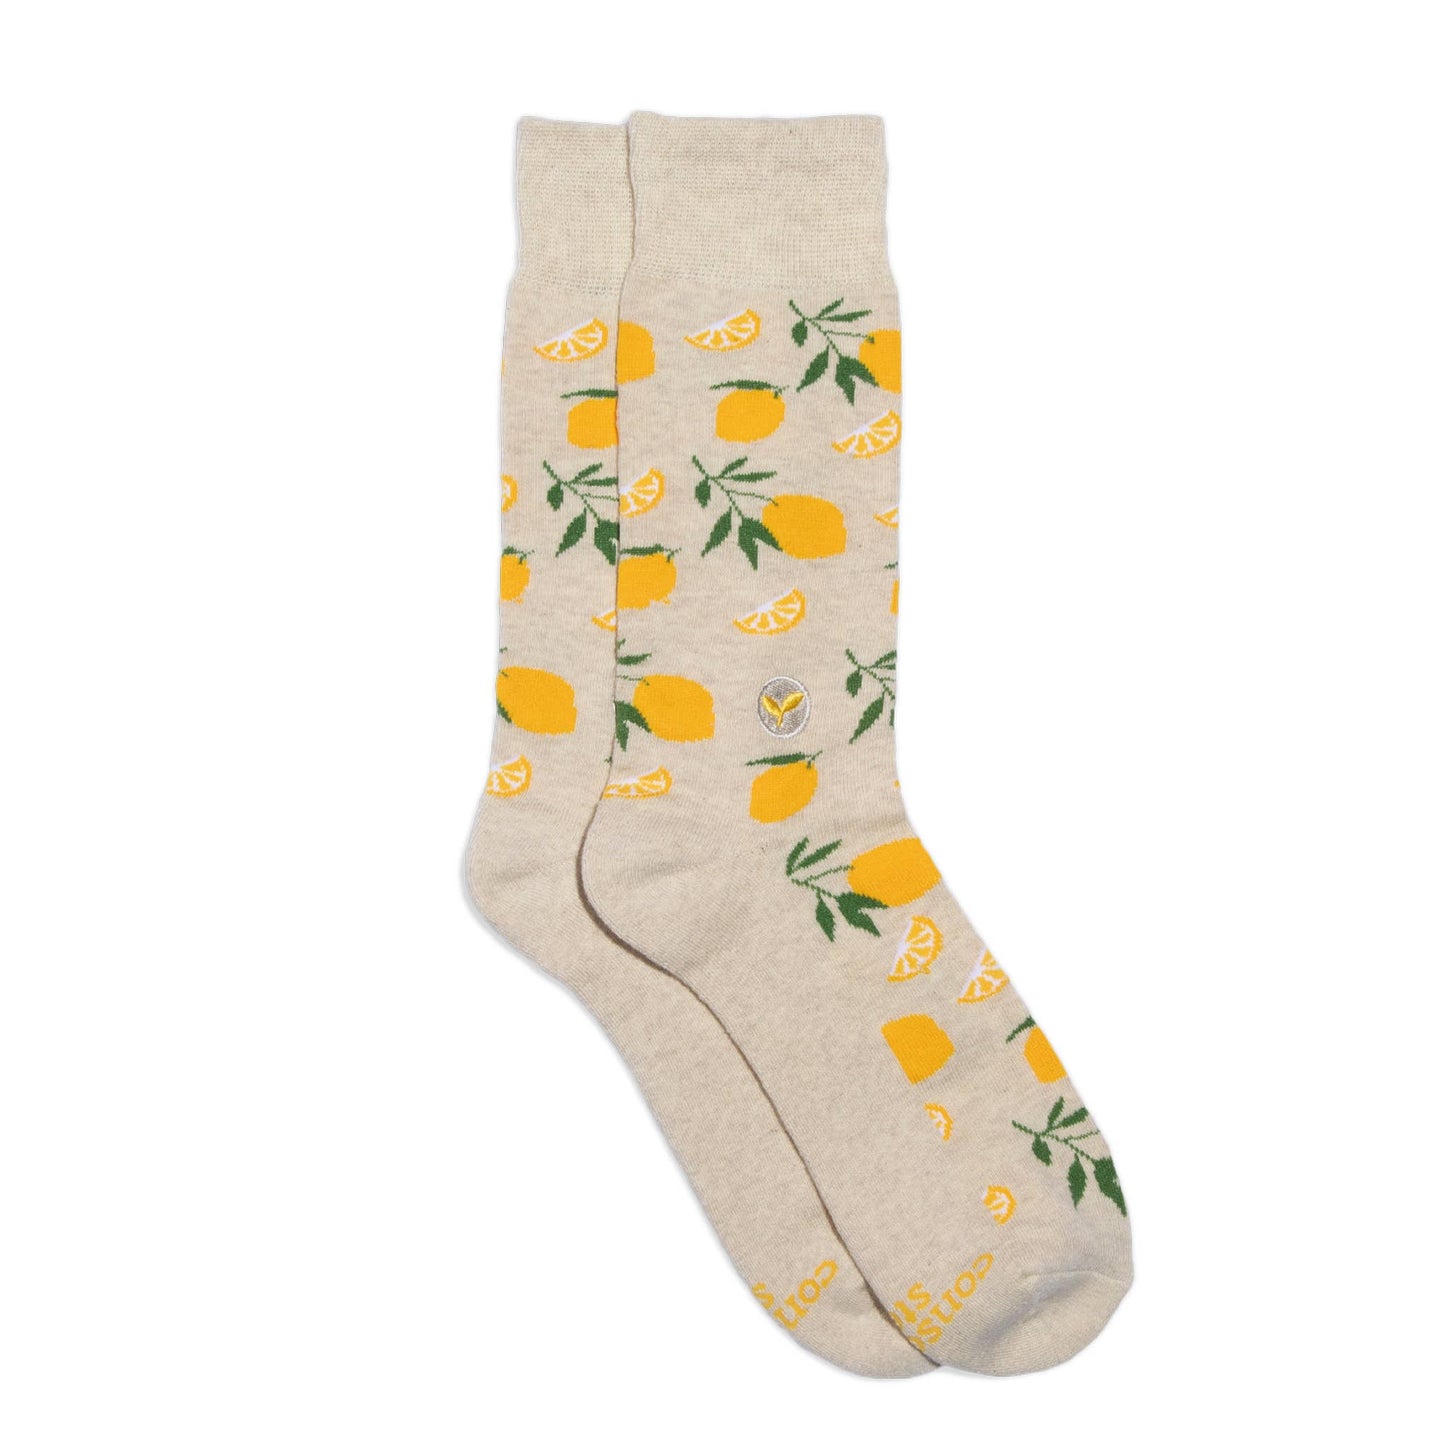 Conscious Step - Socks that Plant Trees (Beige Lemons)